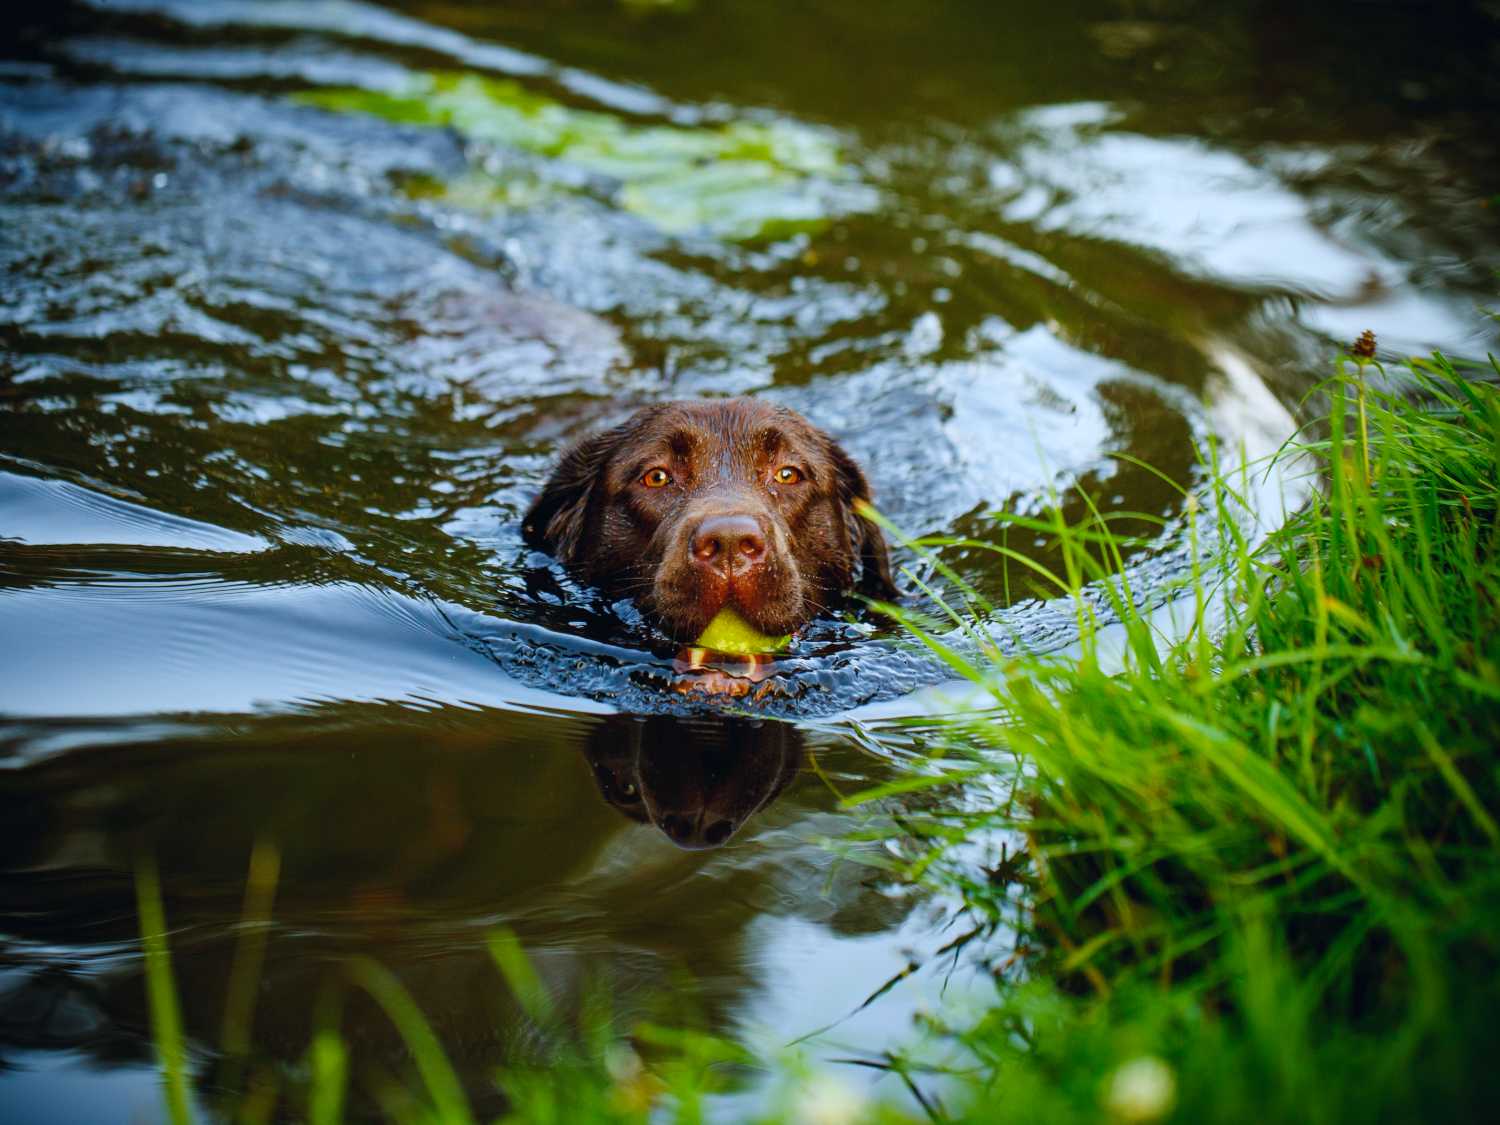 Cyanobacteria in dirty water can kill dogs